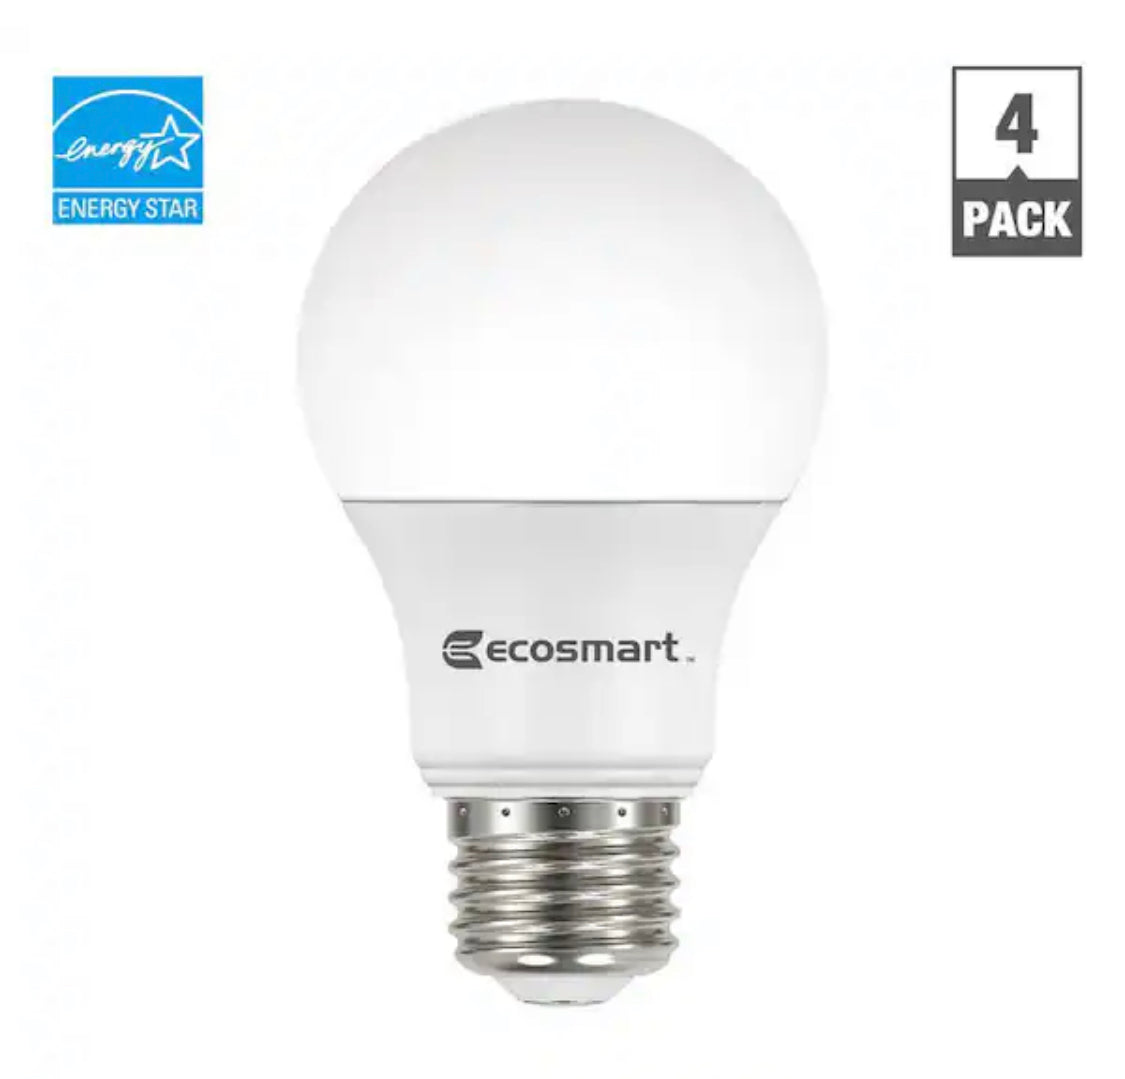 EcoSmart 60-Watt Equivalent A19 Dimmable Energy Star LED Light Bulb Daylight (4-Pack) - Damaged box